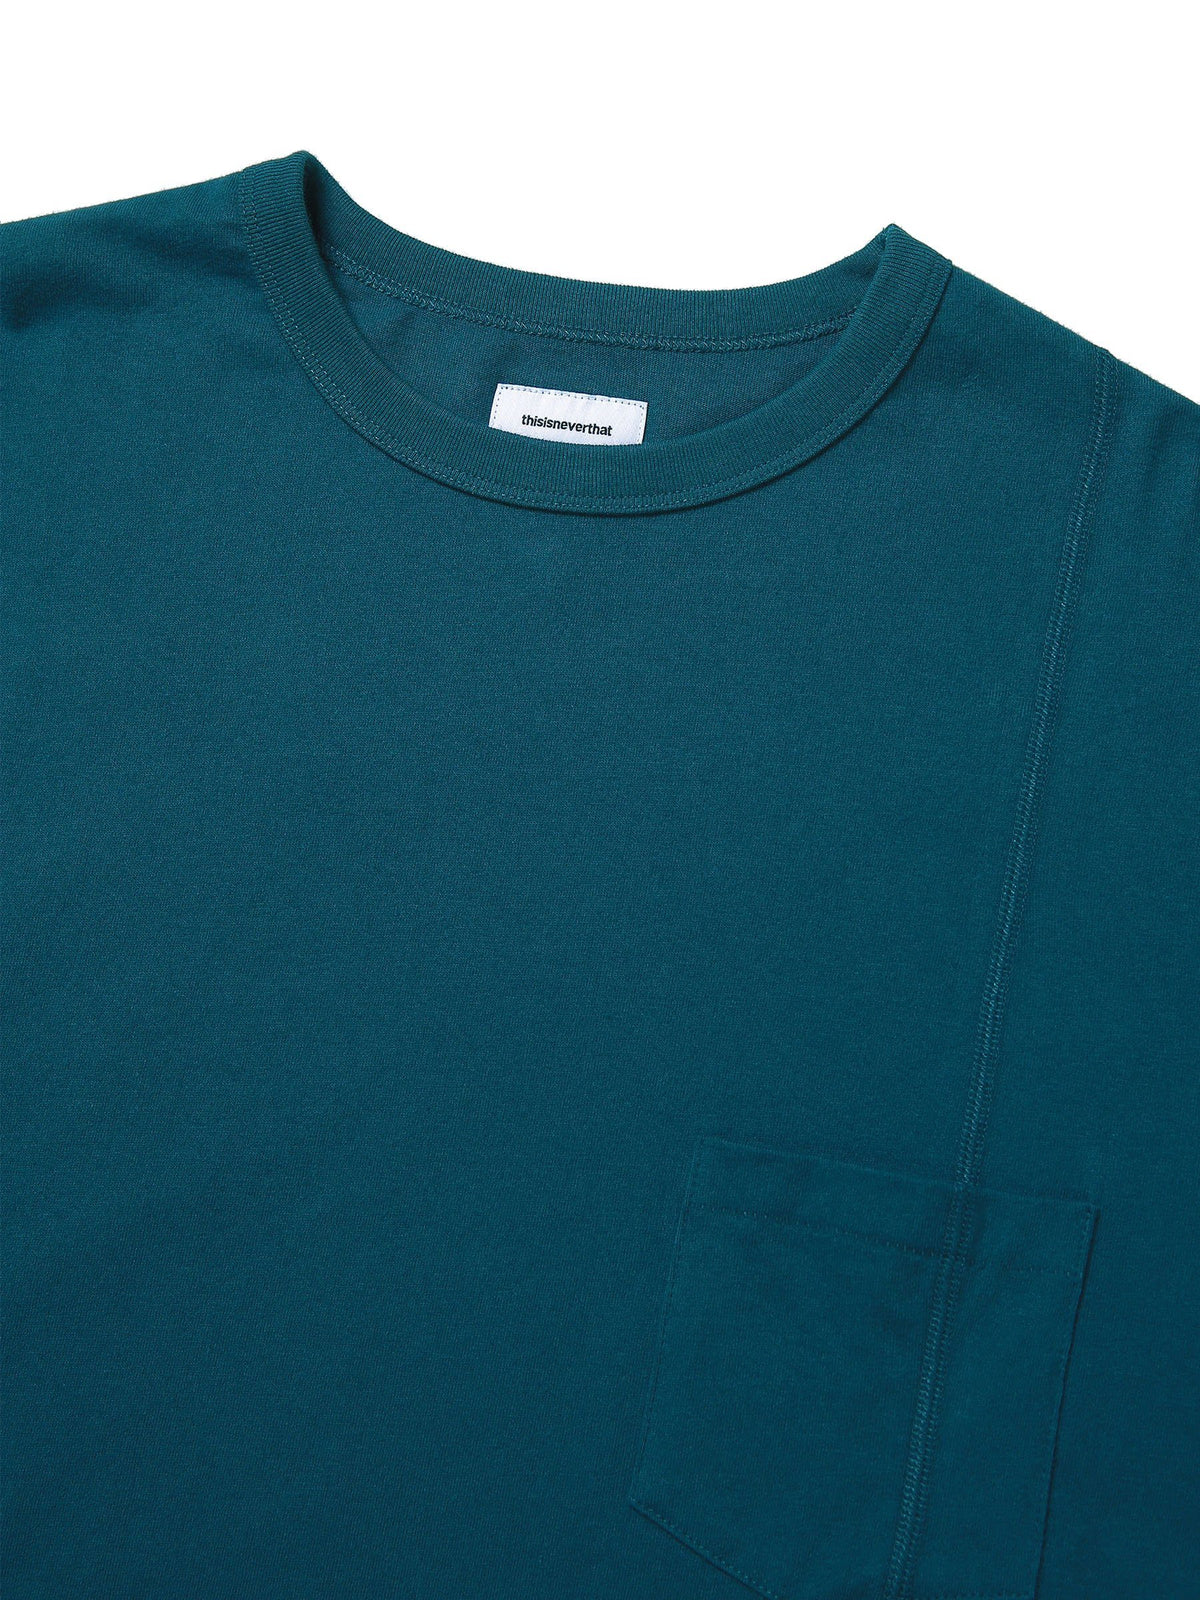 Paneled Pocket L/SL Top L/SL T-Shirt 